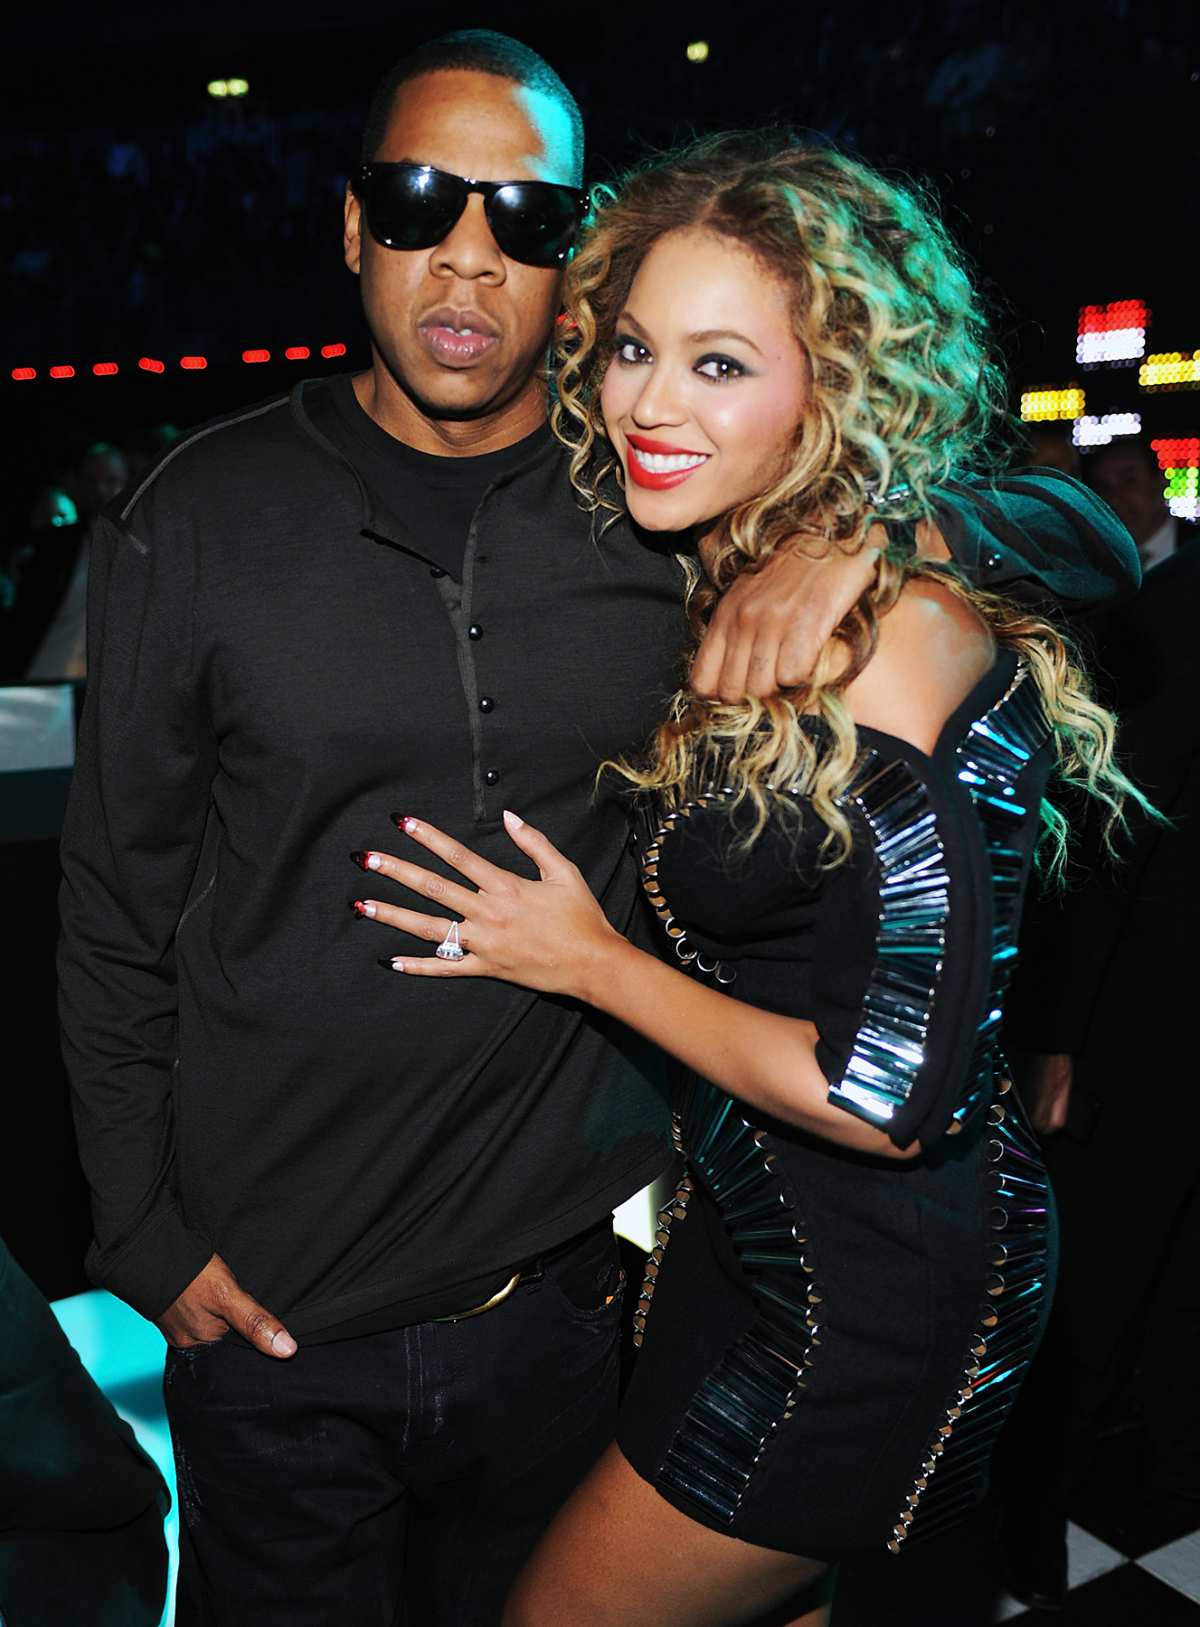 Beyoncé and Jay-Z's Relationship Timeline